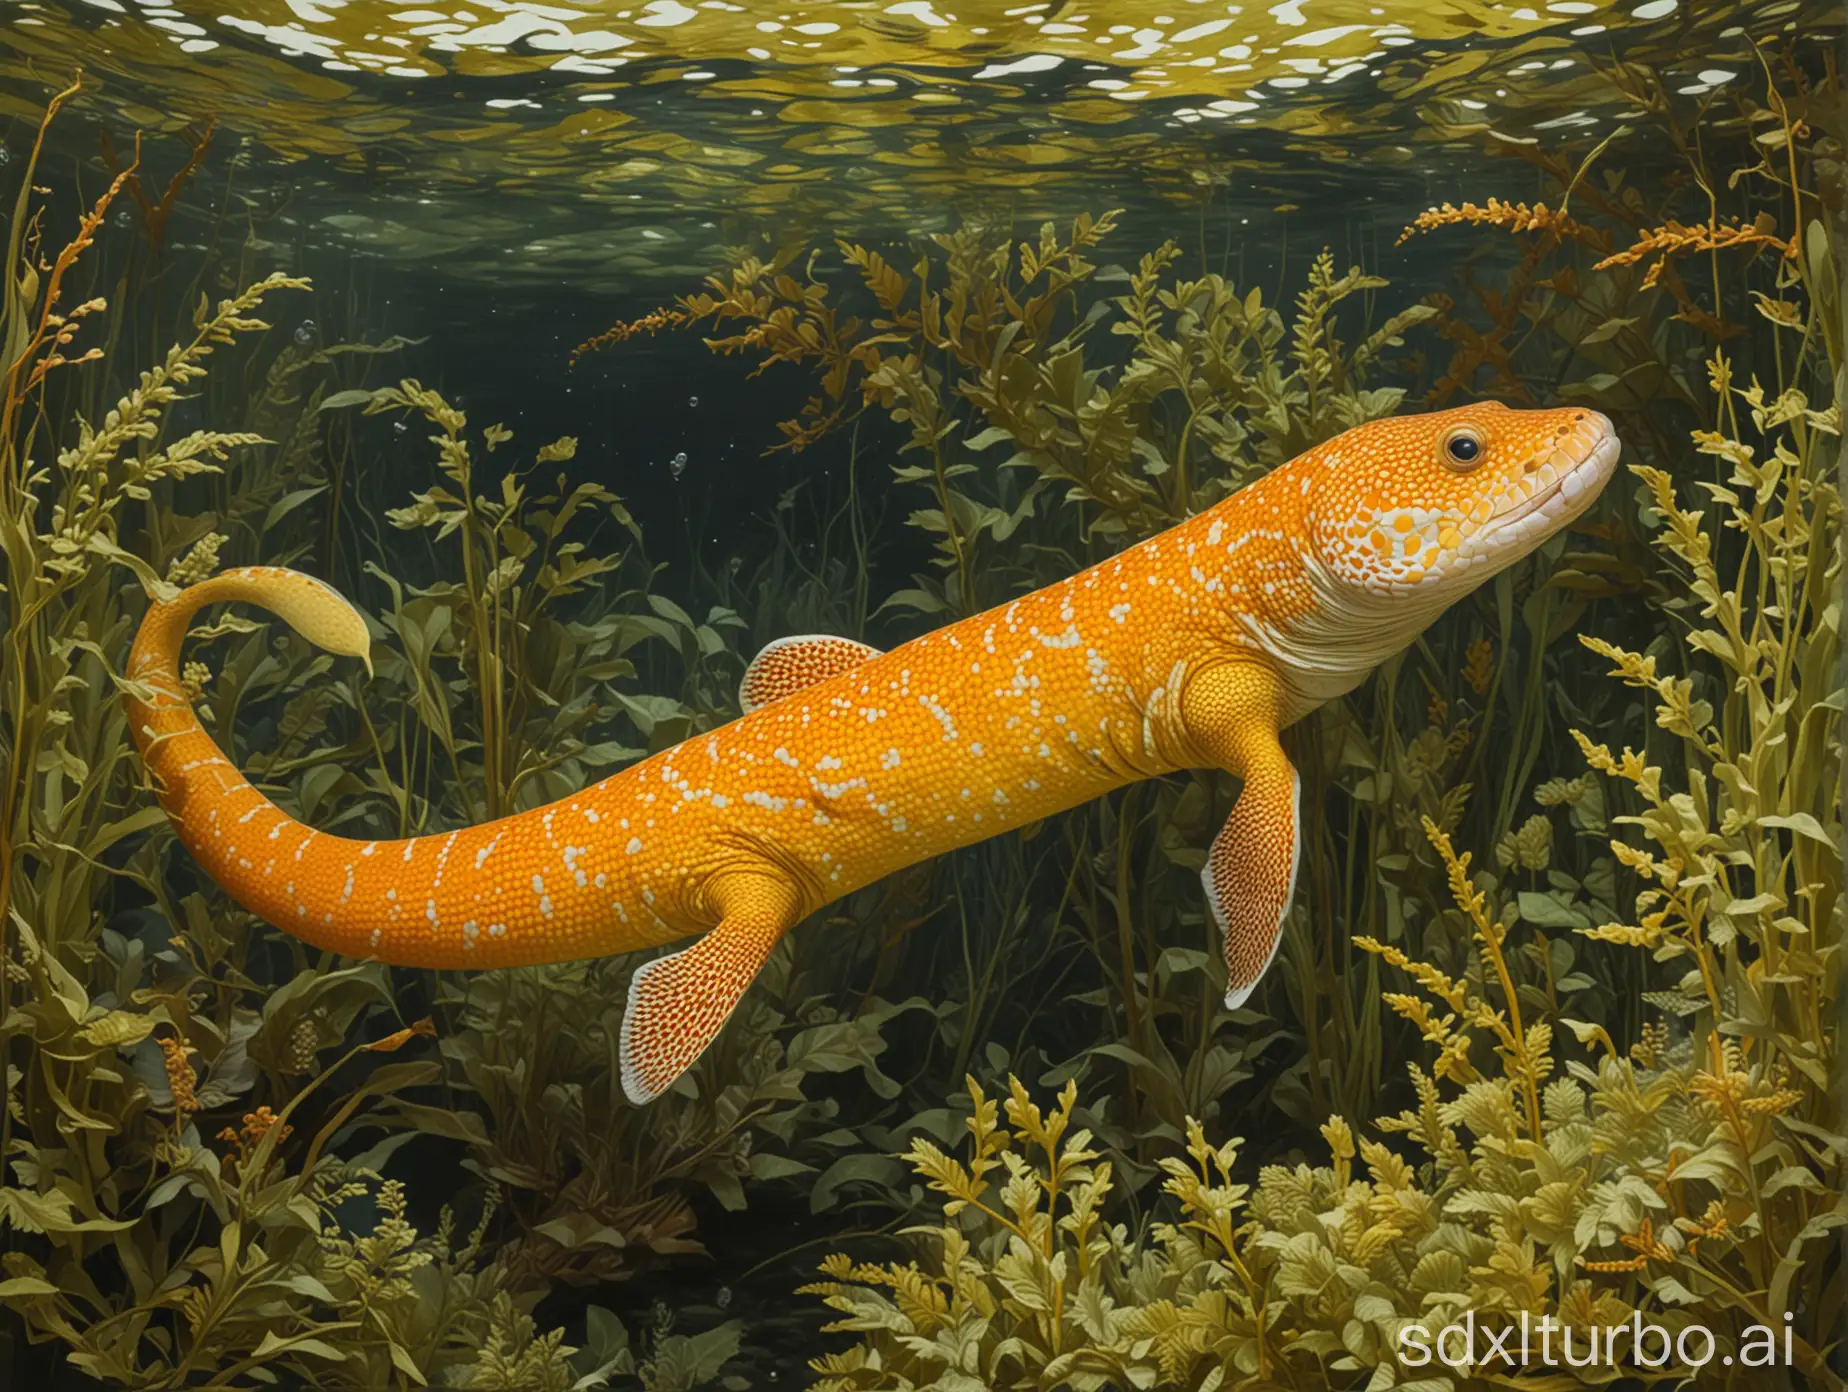 Chromatic-OrangeYellow-Moray-Swimming-Among-Aquatic-Plants